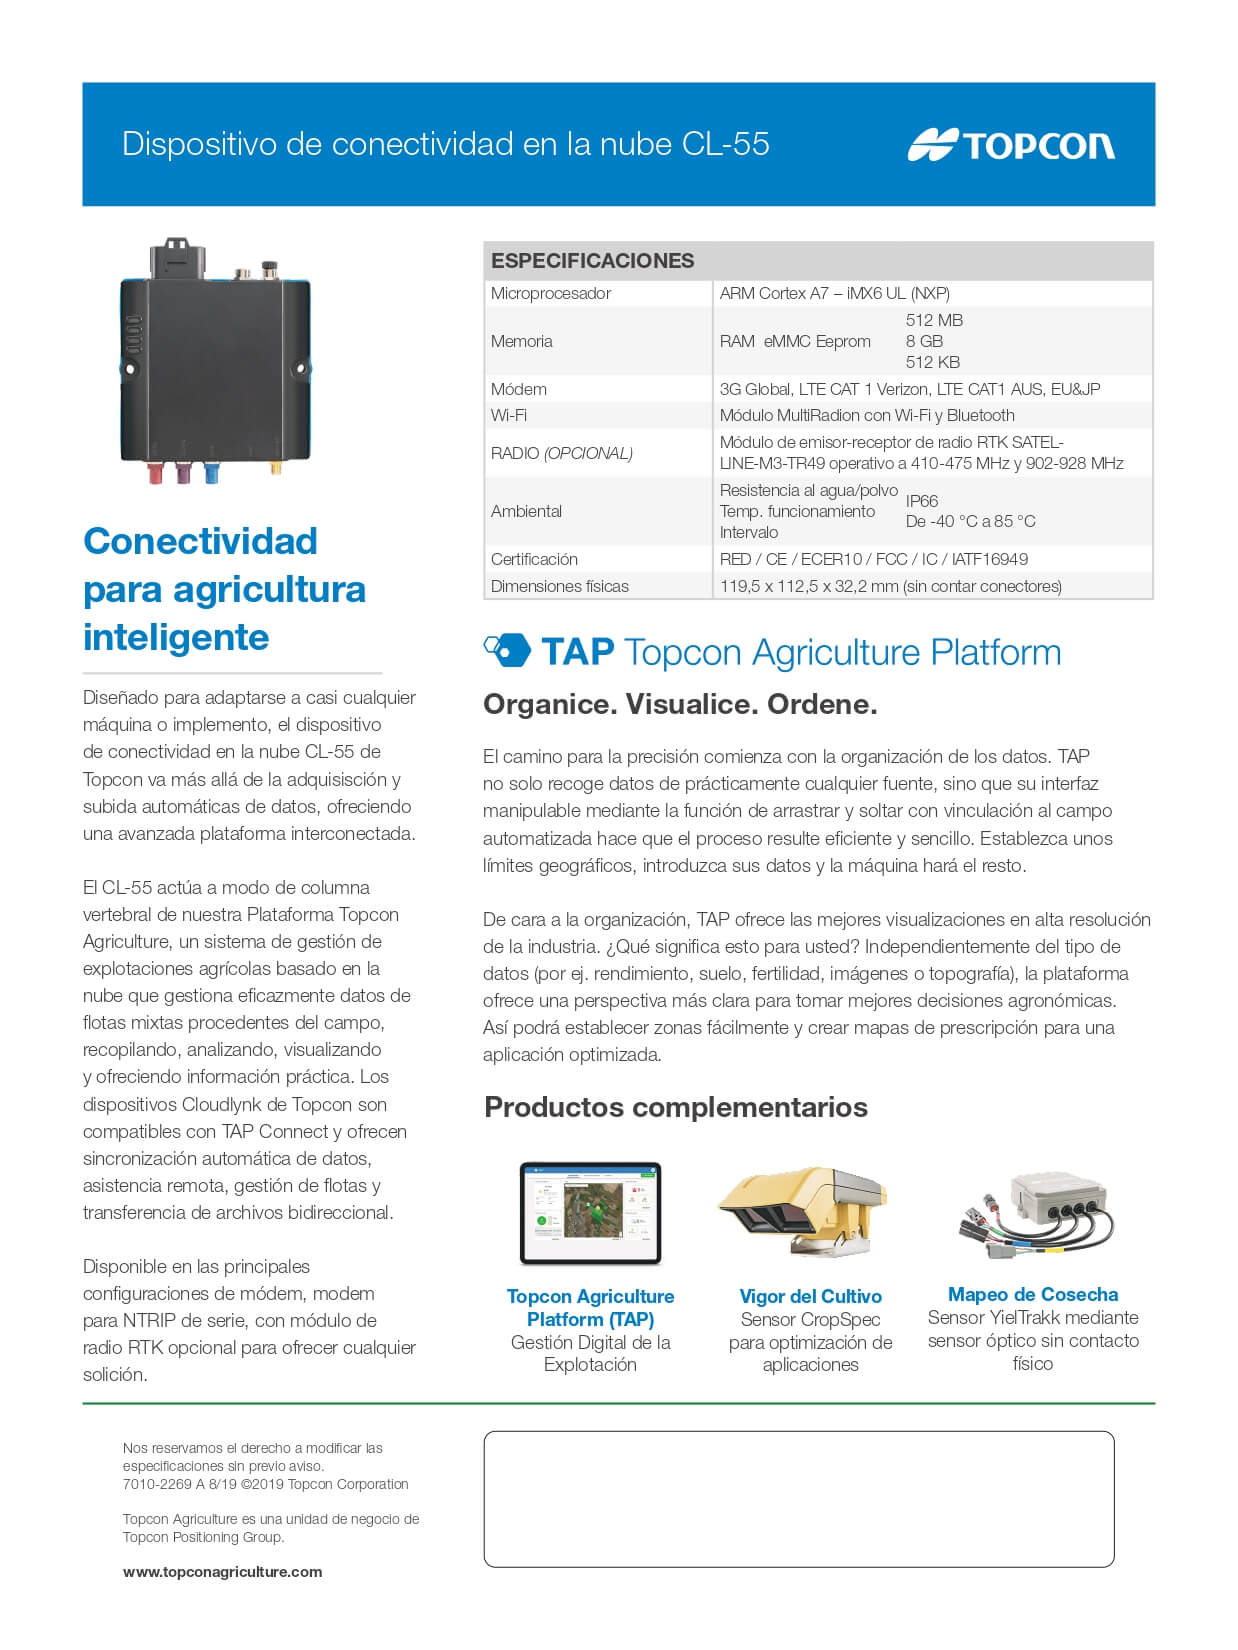 Topcon Agriculture Platform